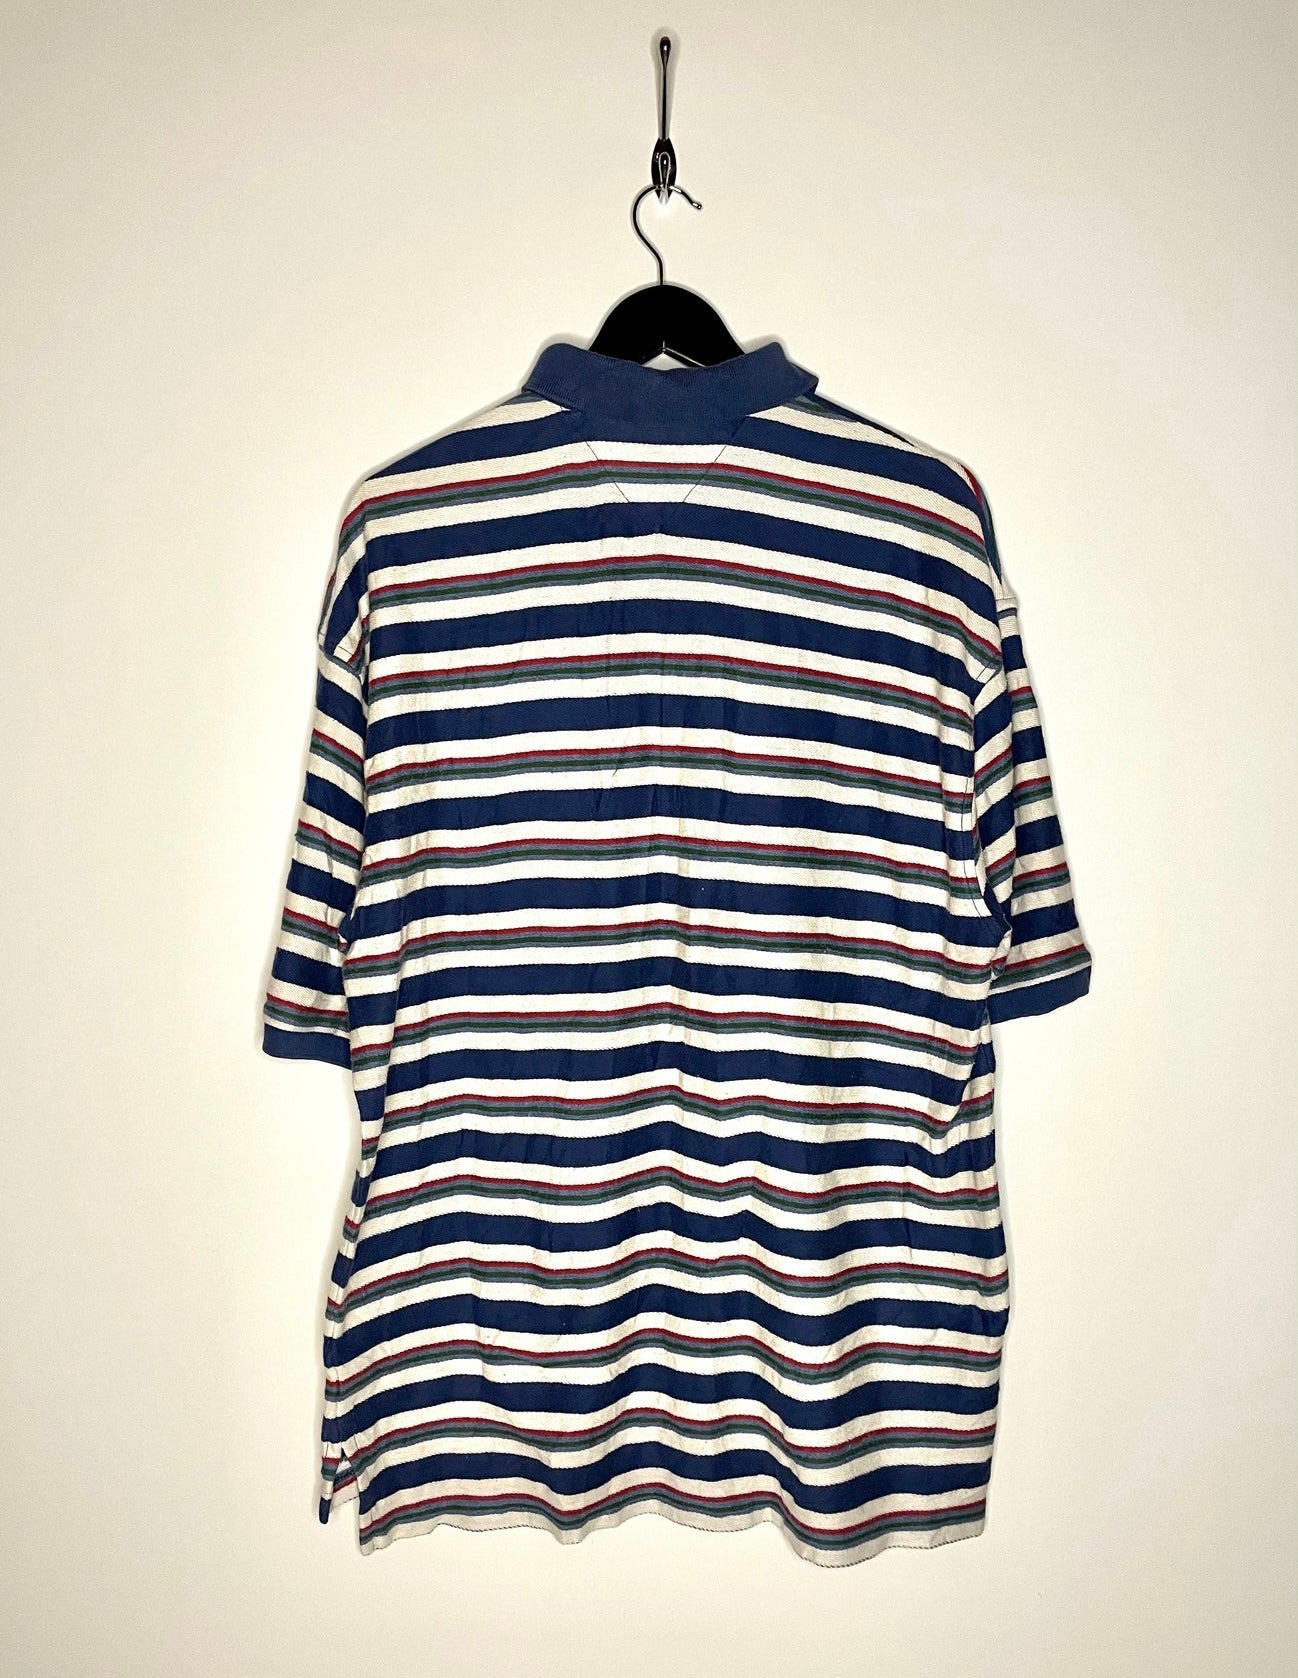 Tommy Hilfiger polo shirt colorful stripes size 2XL